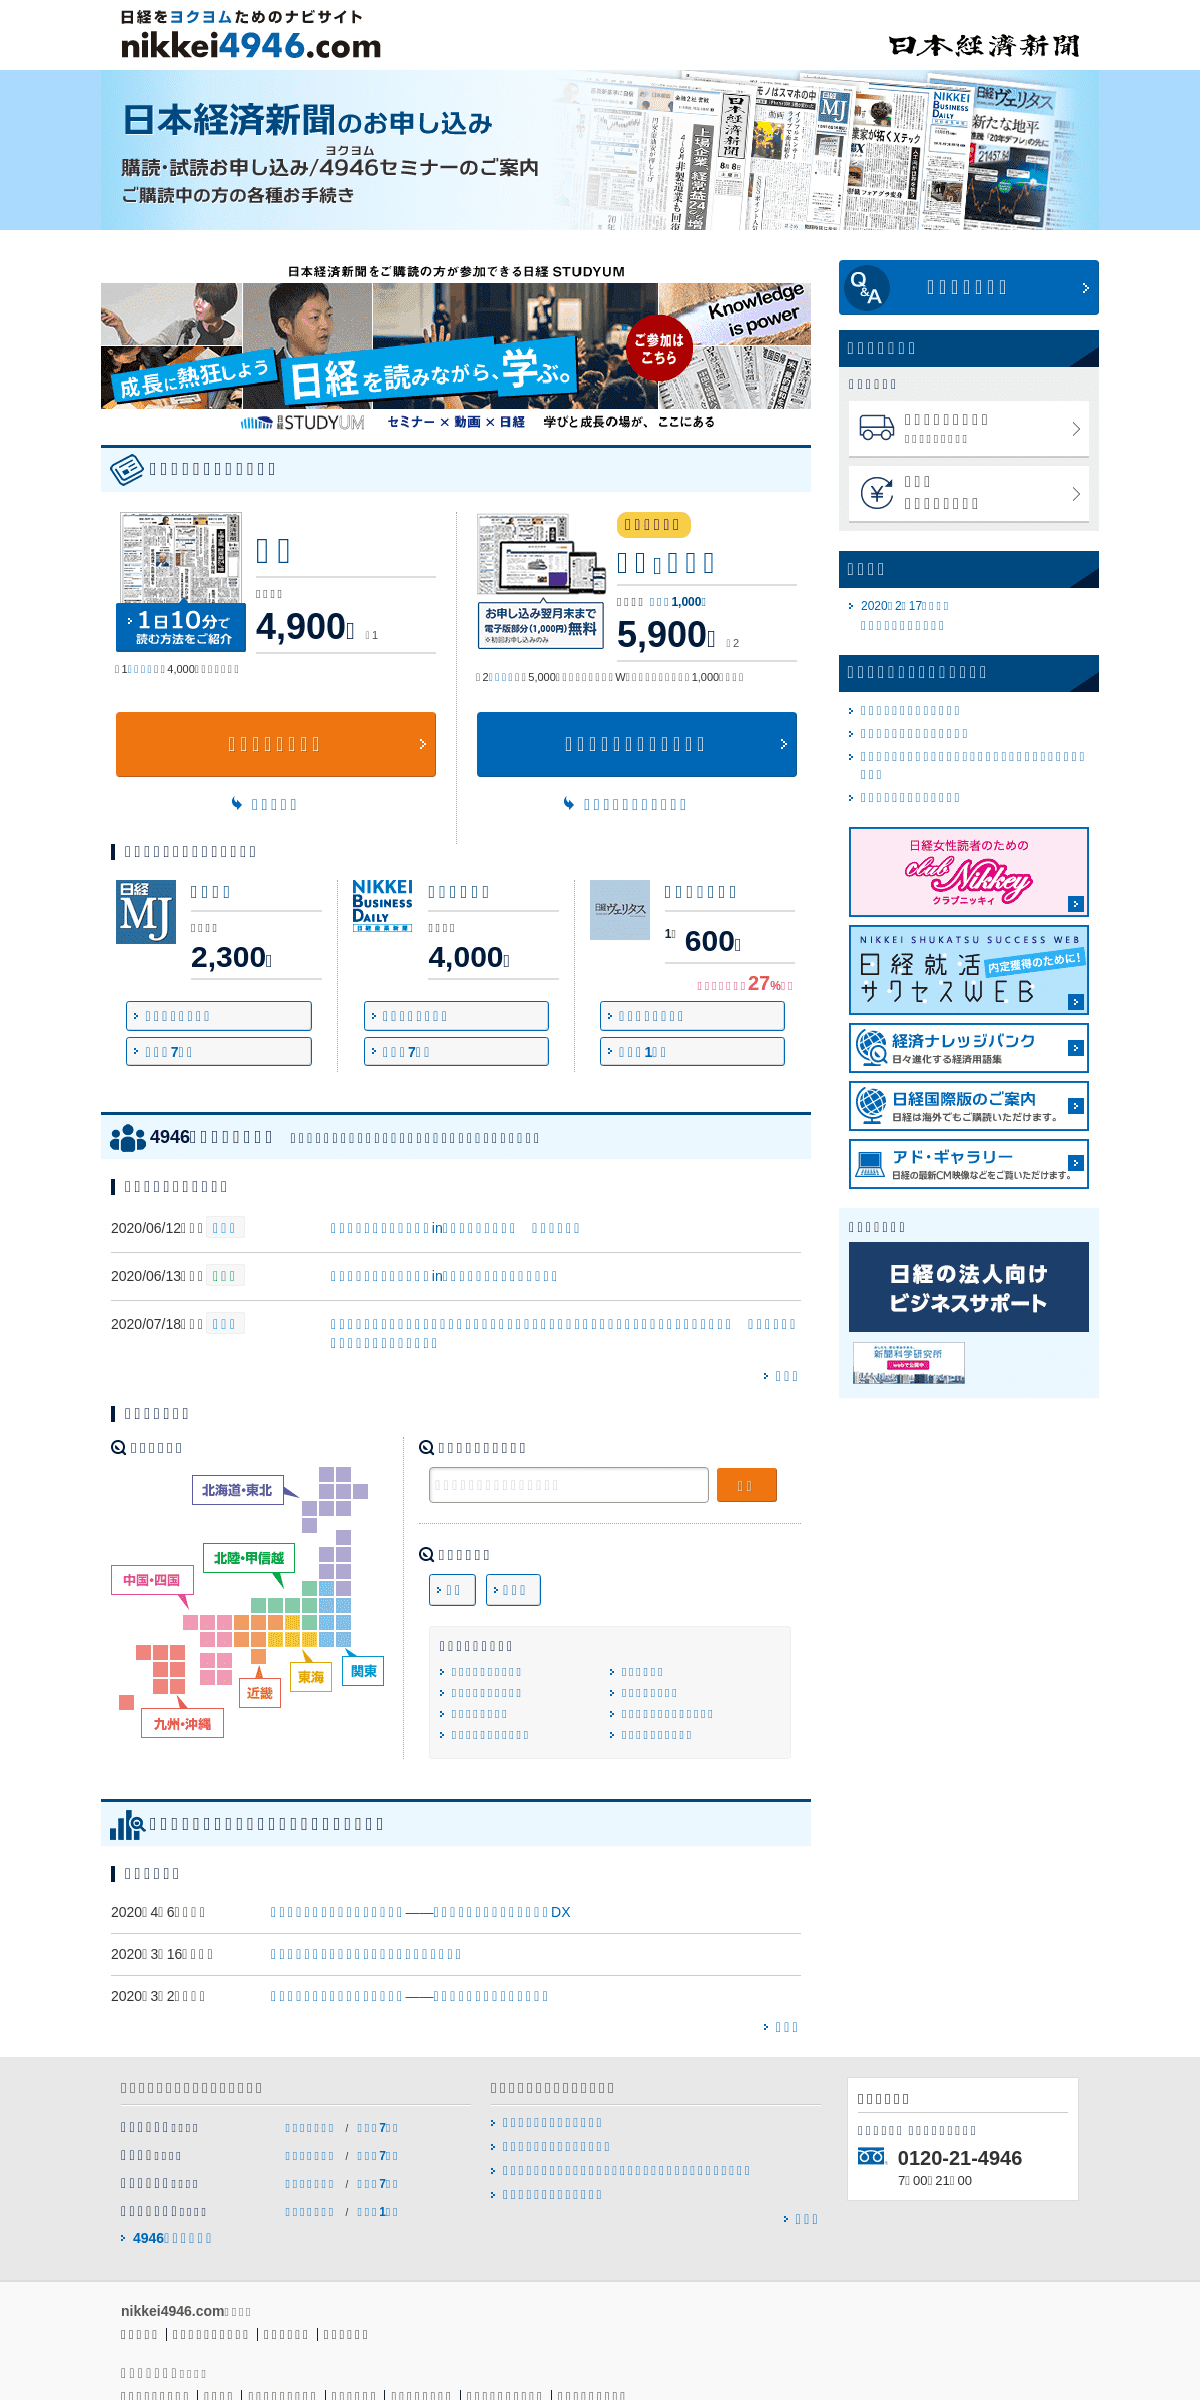 A complete backup of nikkei4946.com